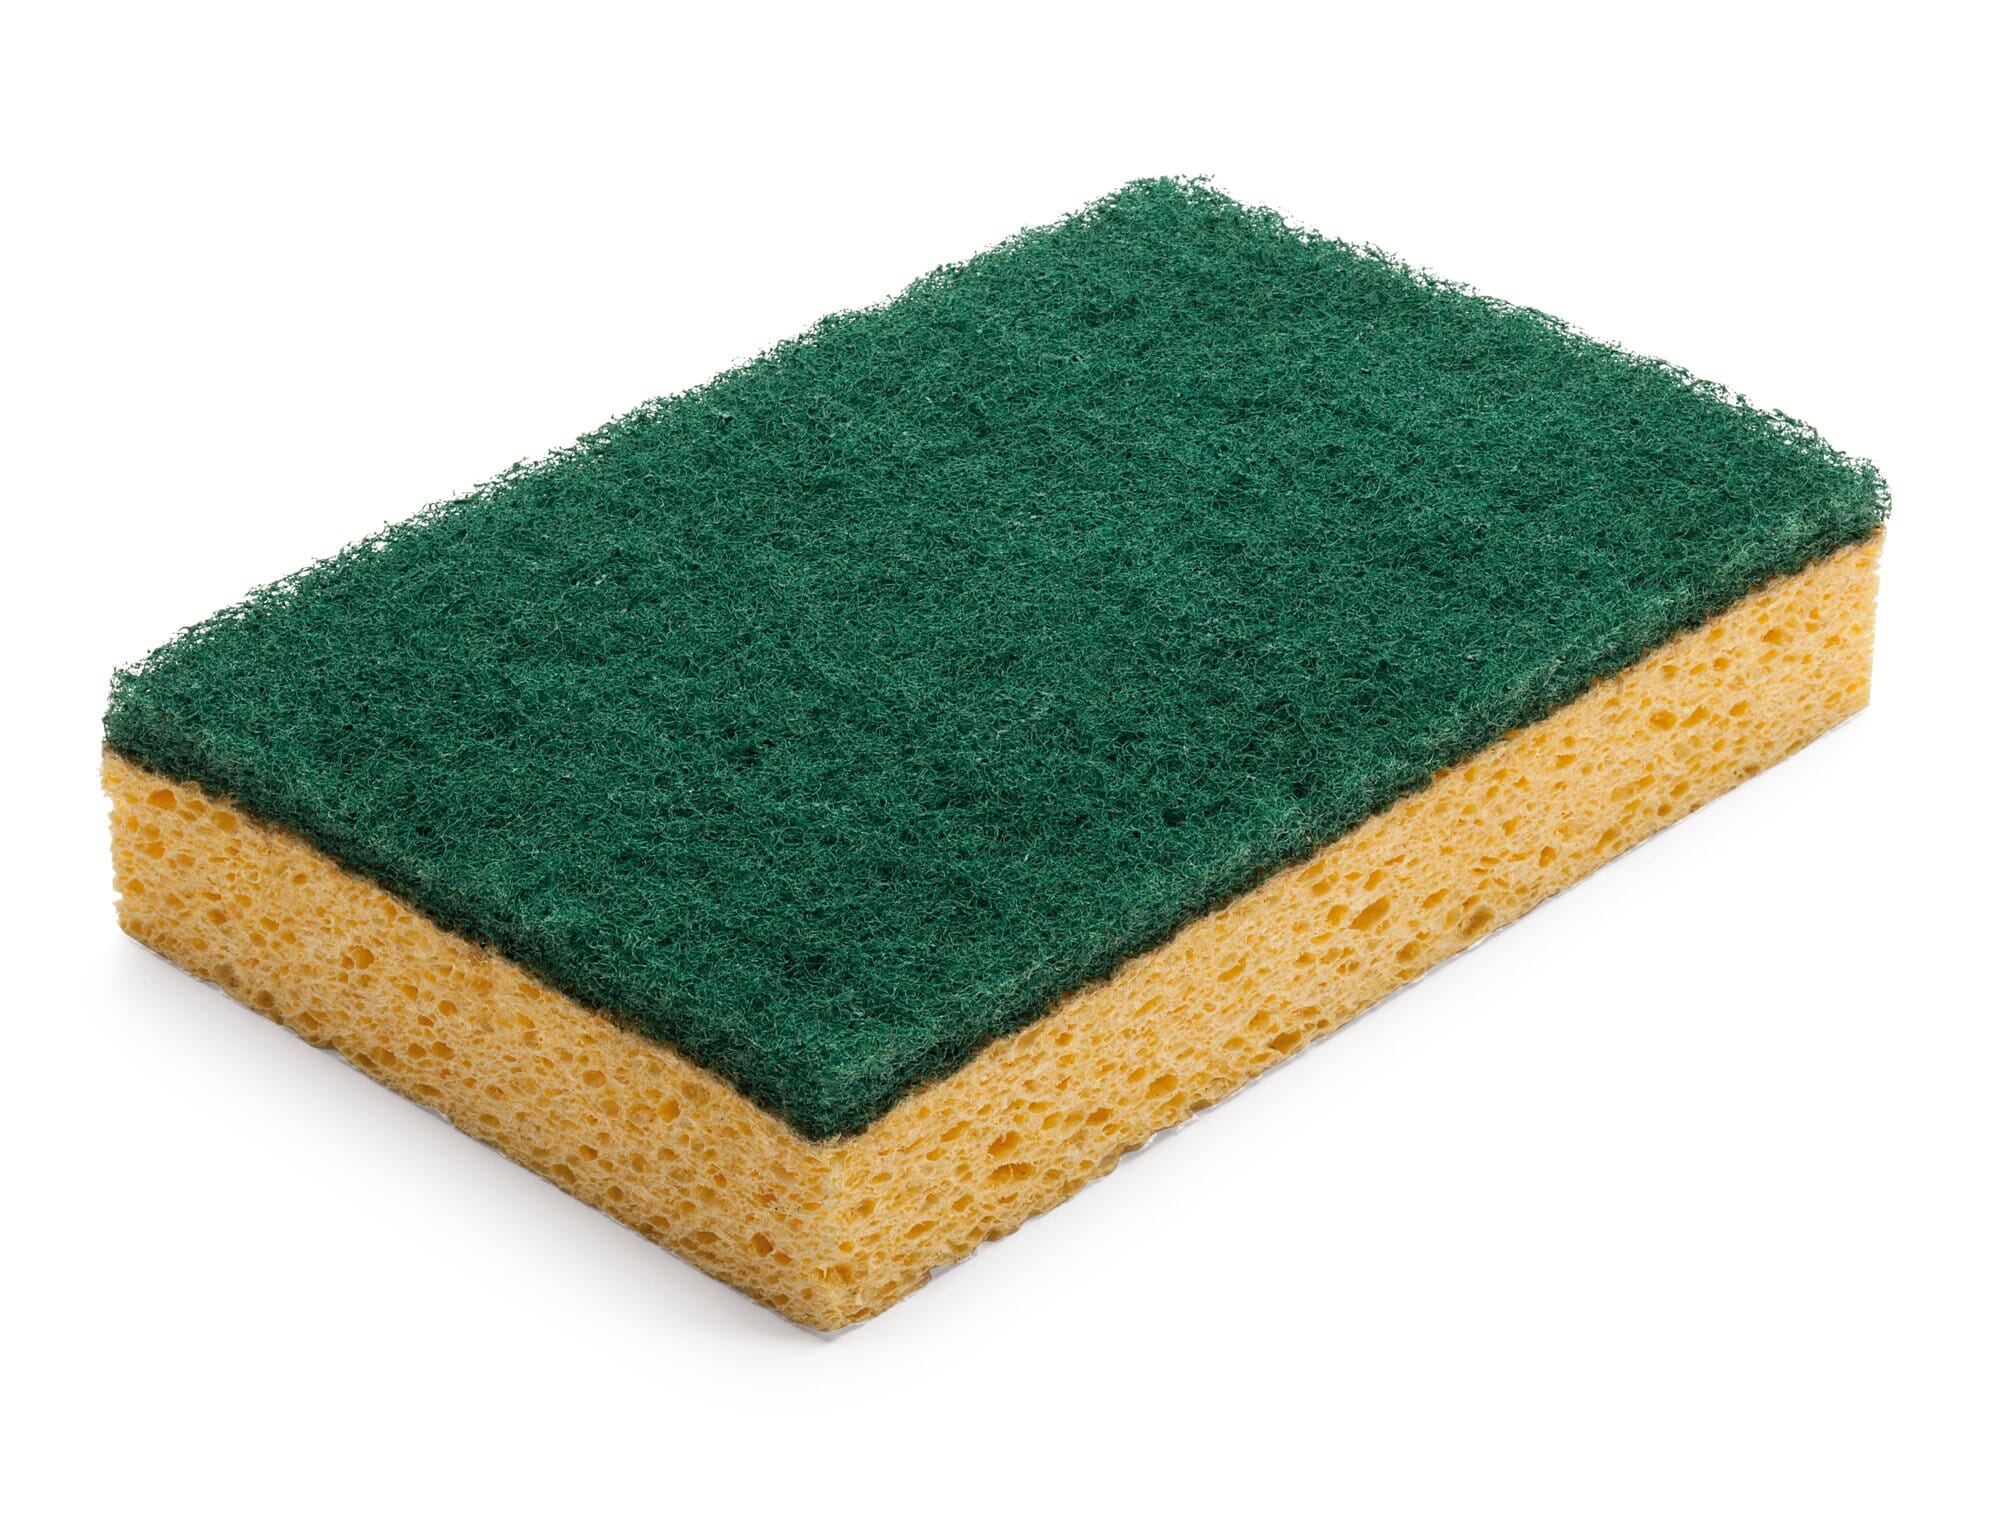 https://assets.manufactum.de/p/044/044085/44085_01.jpg/abrasive-sponge-cellulose-strong.jpg